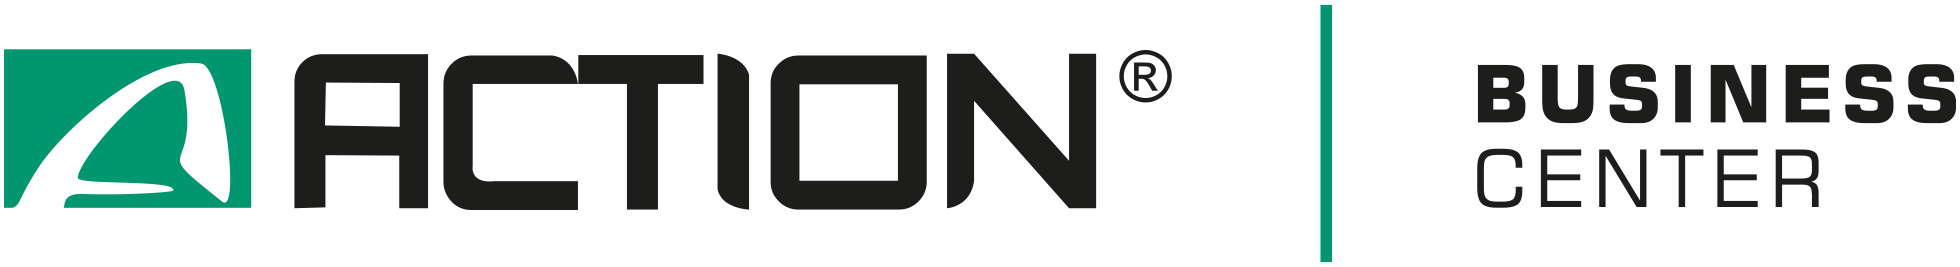 Action Business Center [logo]